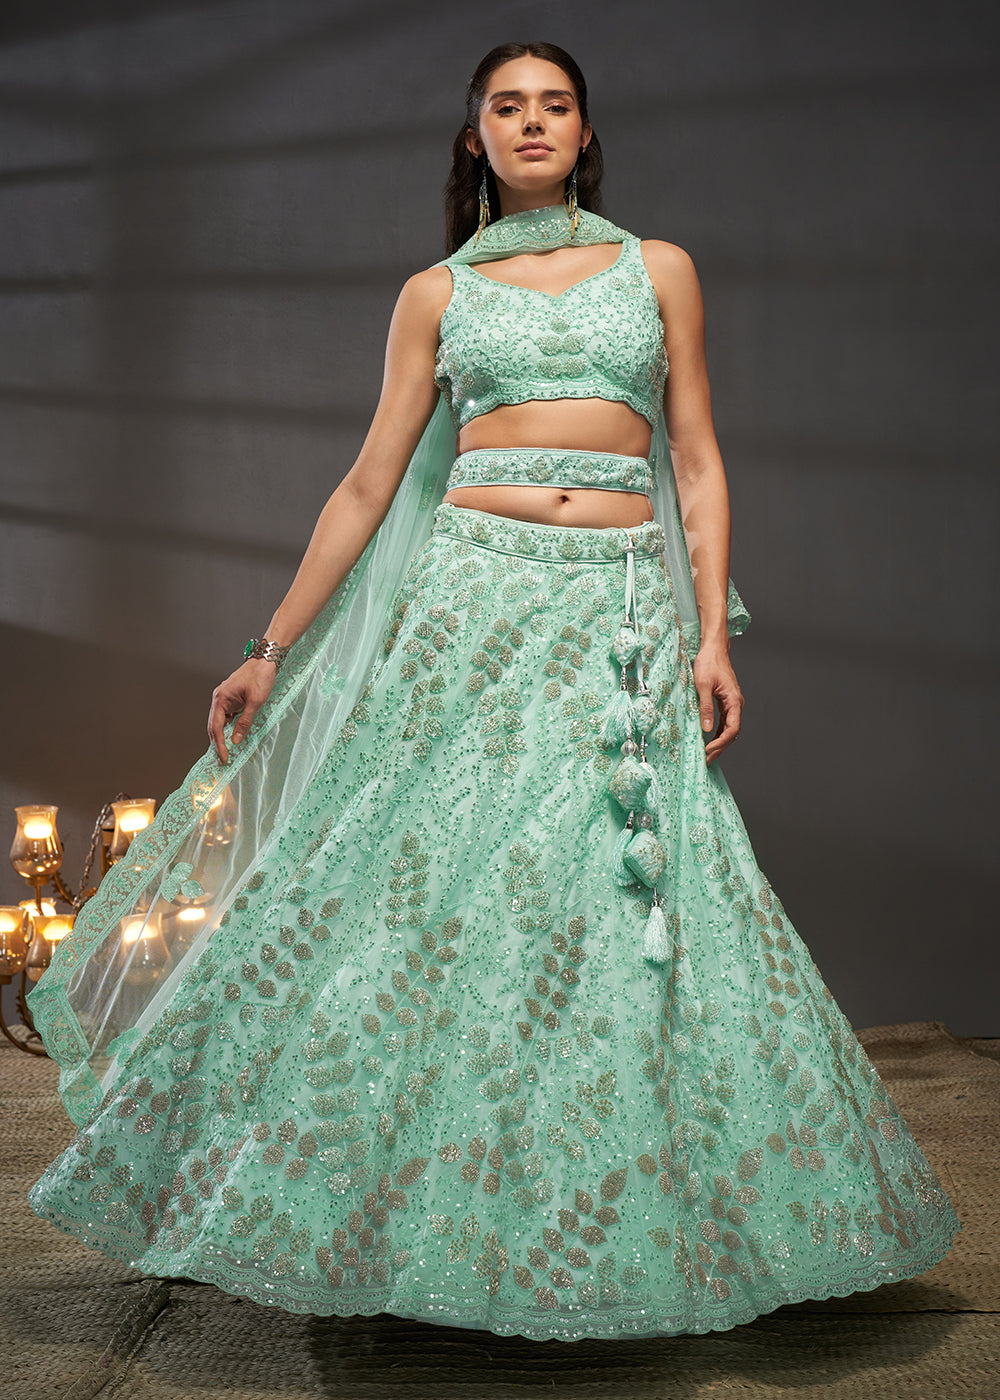 Buy Now Zarkan Embroidered Turquoise Designer Bridal Lehenga Choli Online in USA, UK, Canada & Worldwide at Empress Clothing.